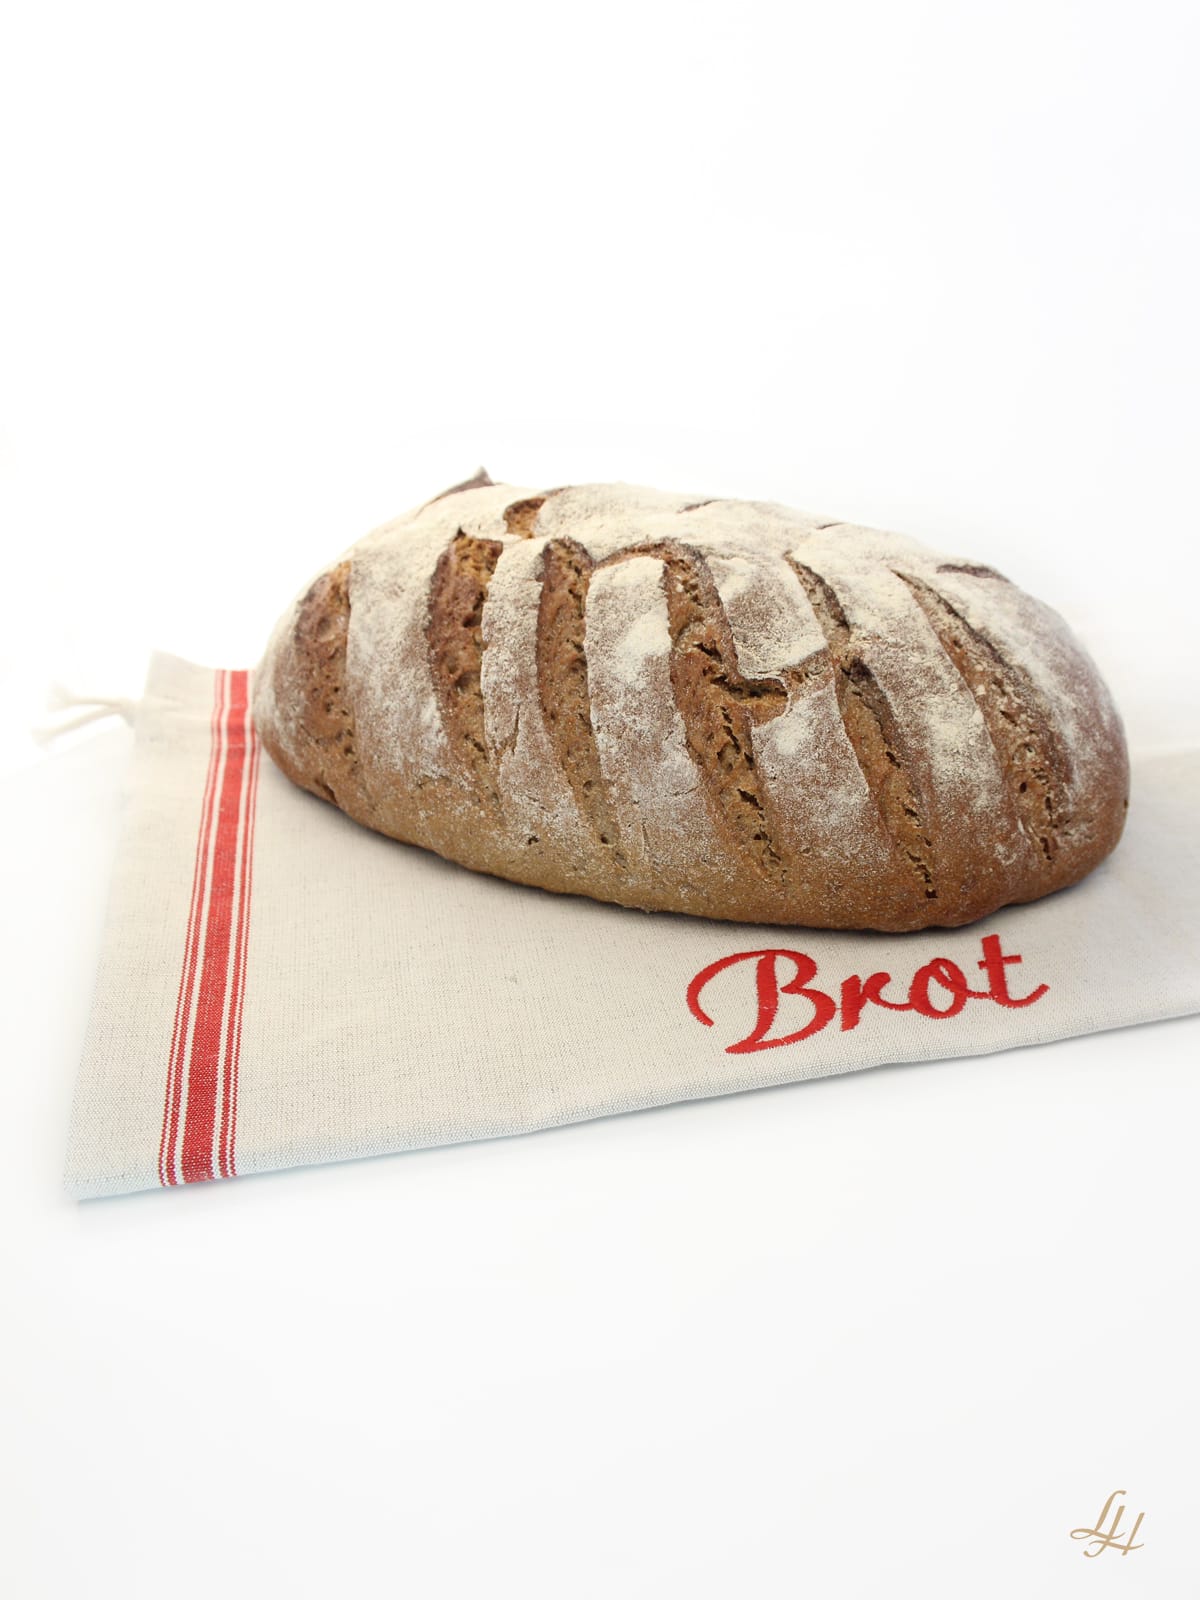 Brotbeutel mit Stickerei in Rot mit Brot